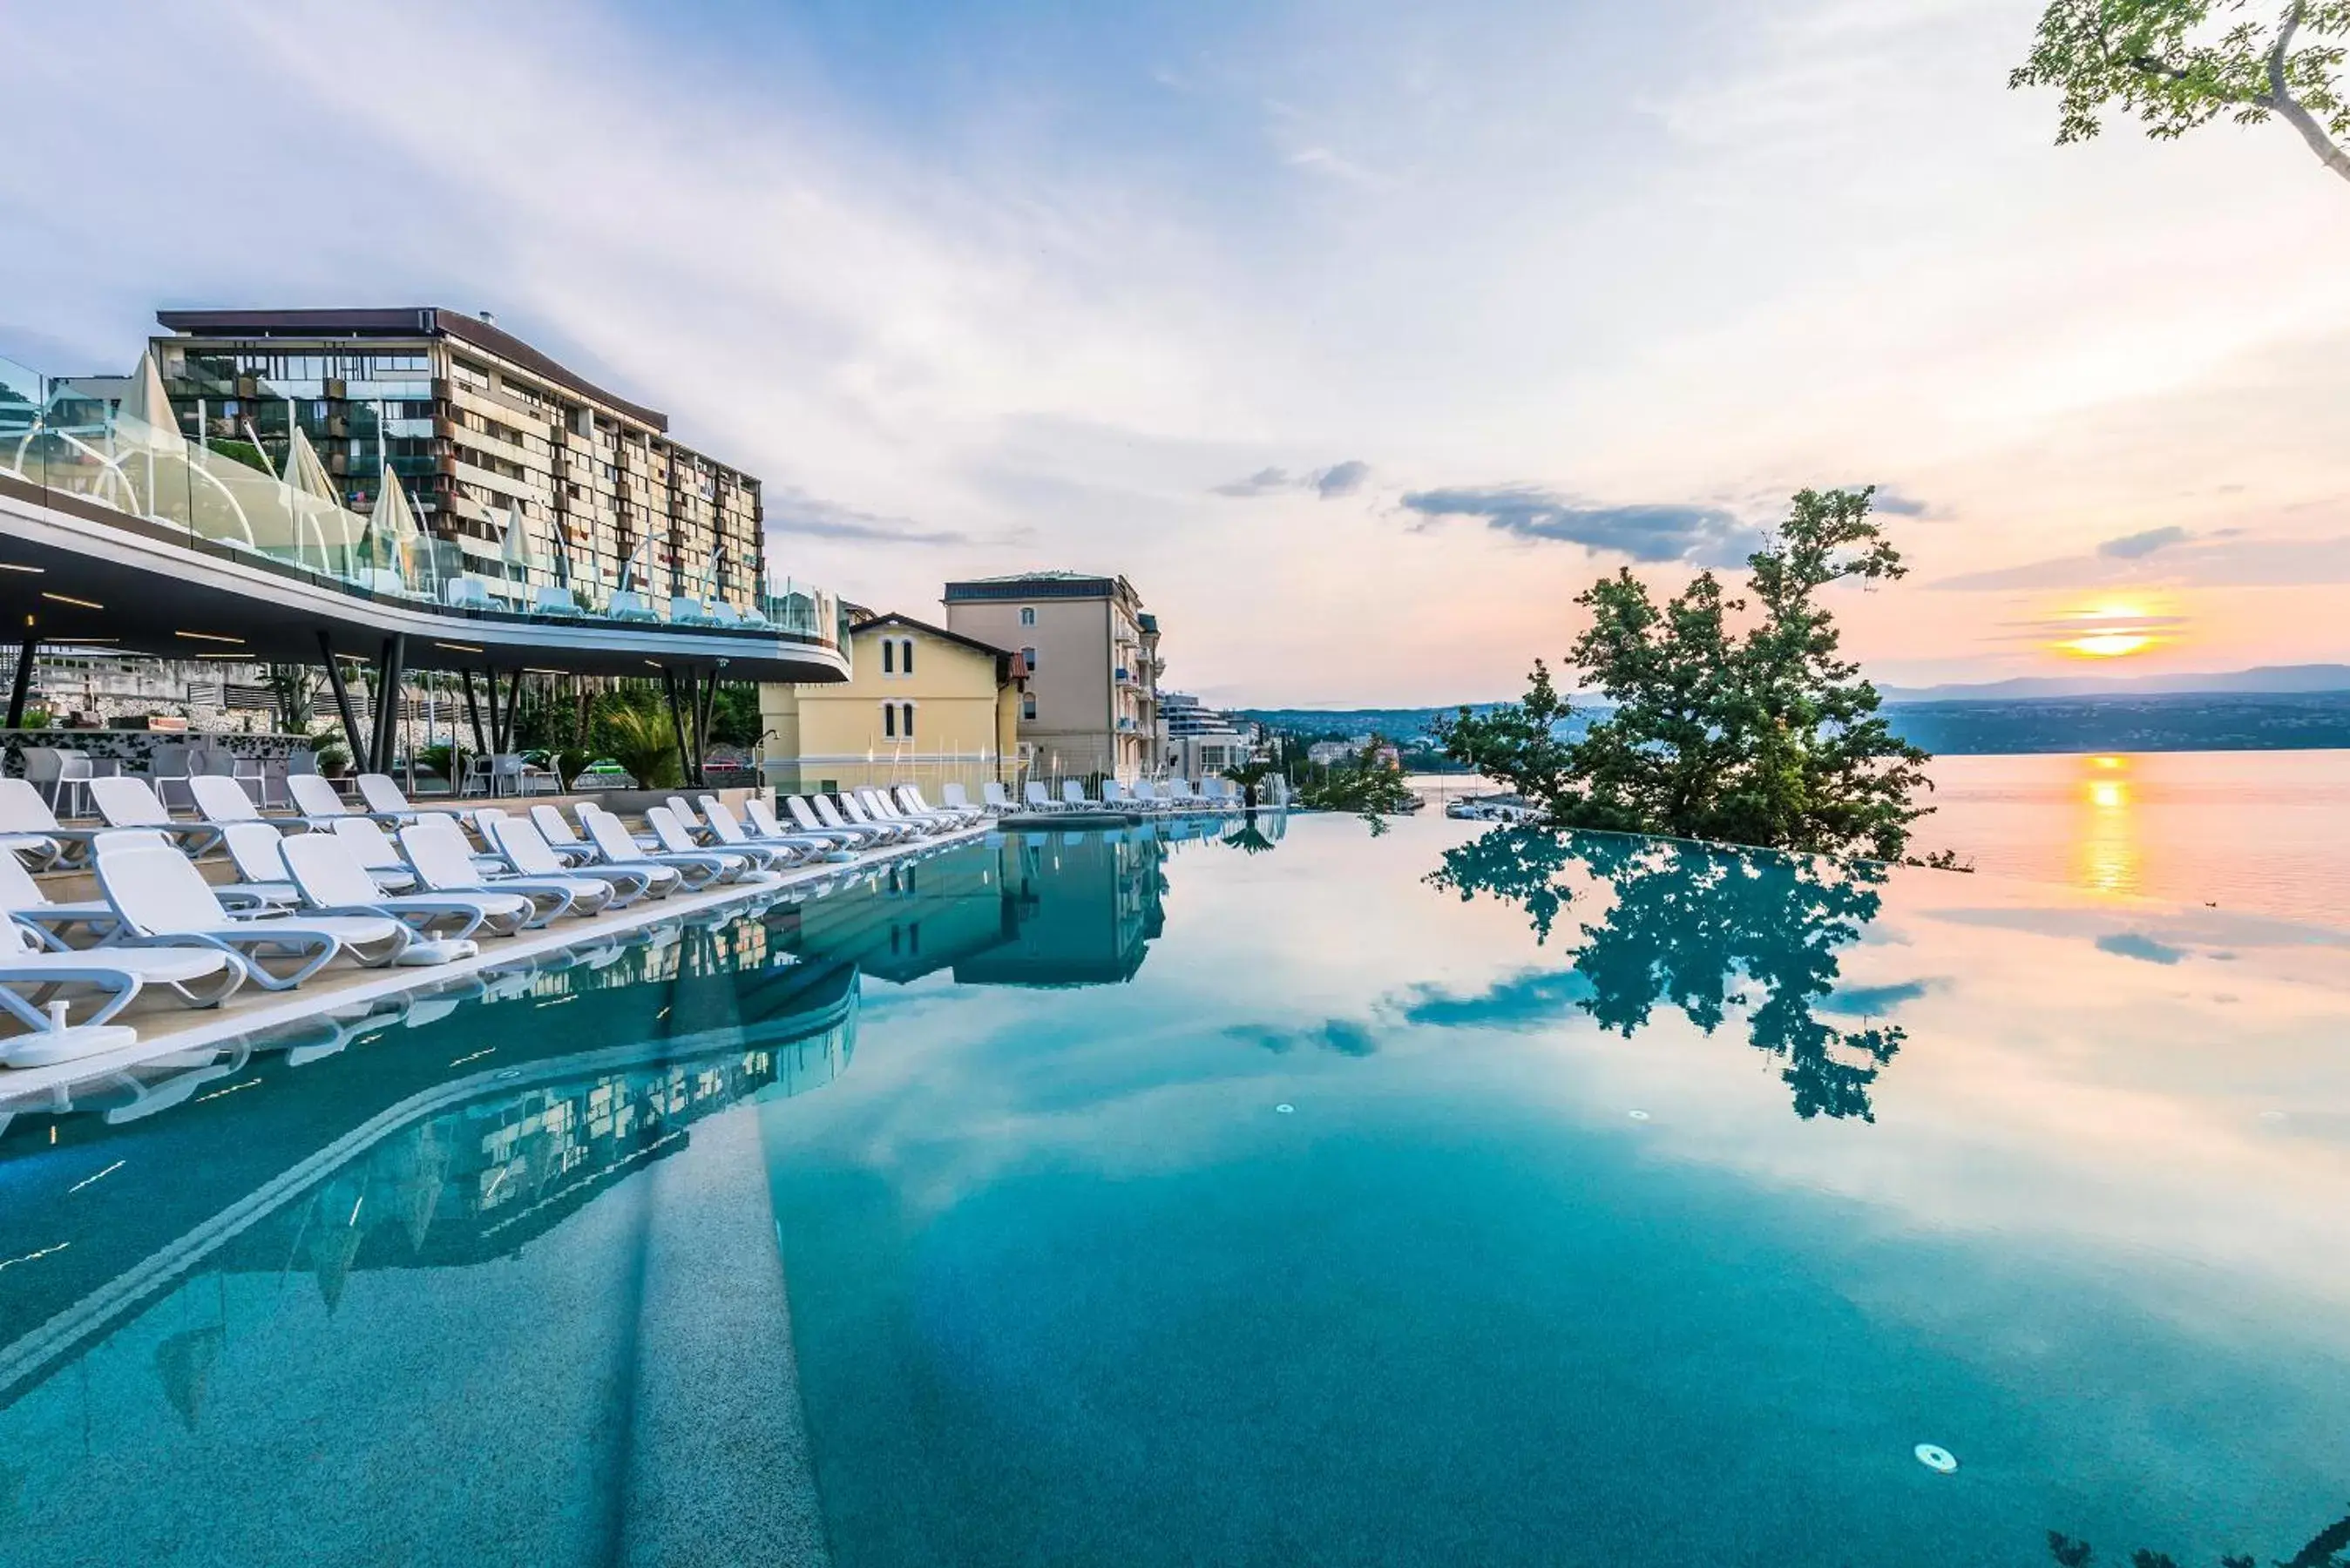 Swimming pool in Grand Hotel Adriatic